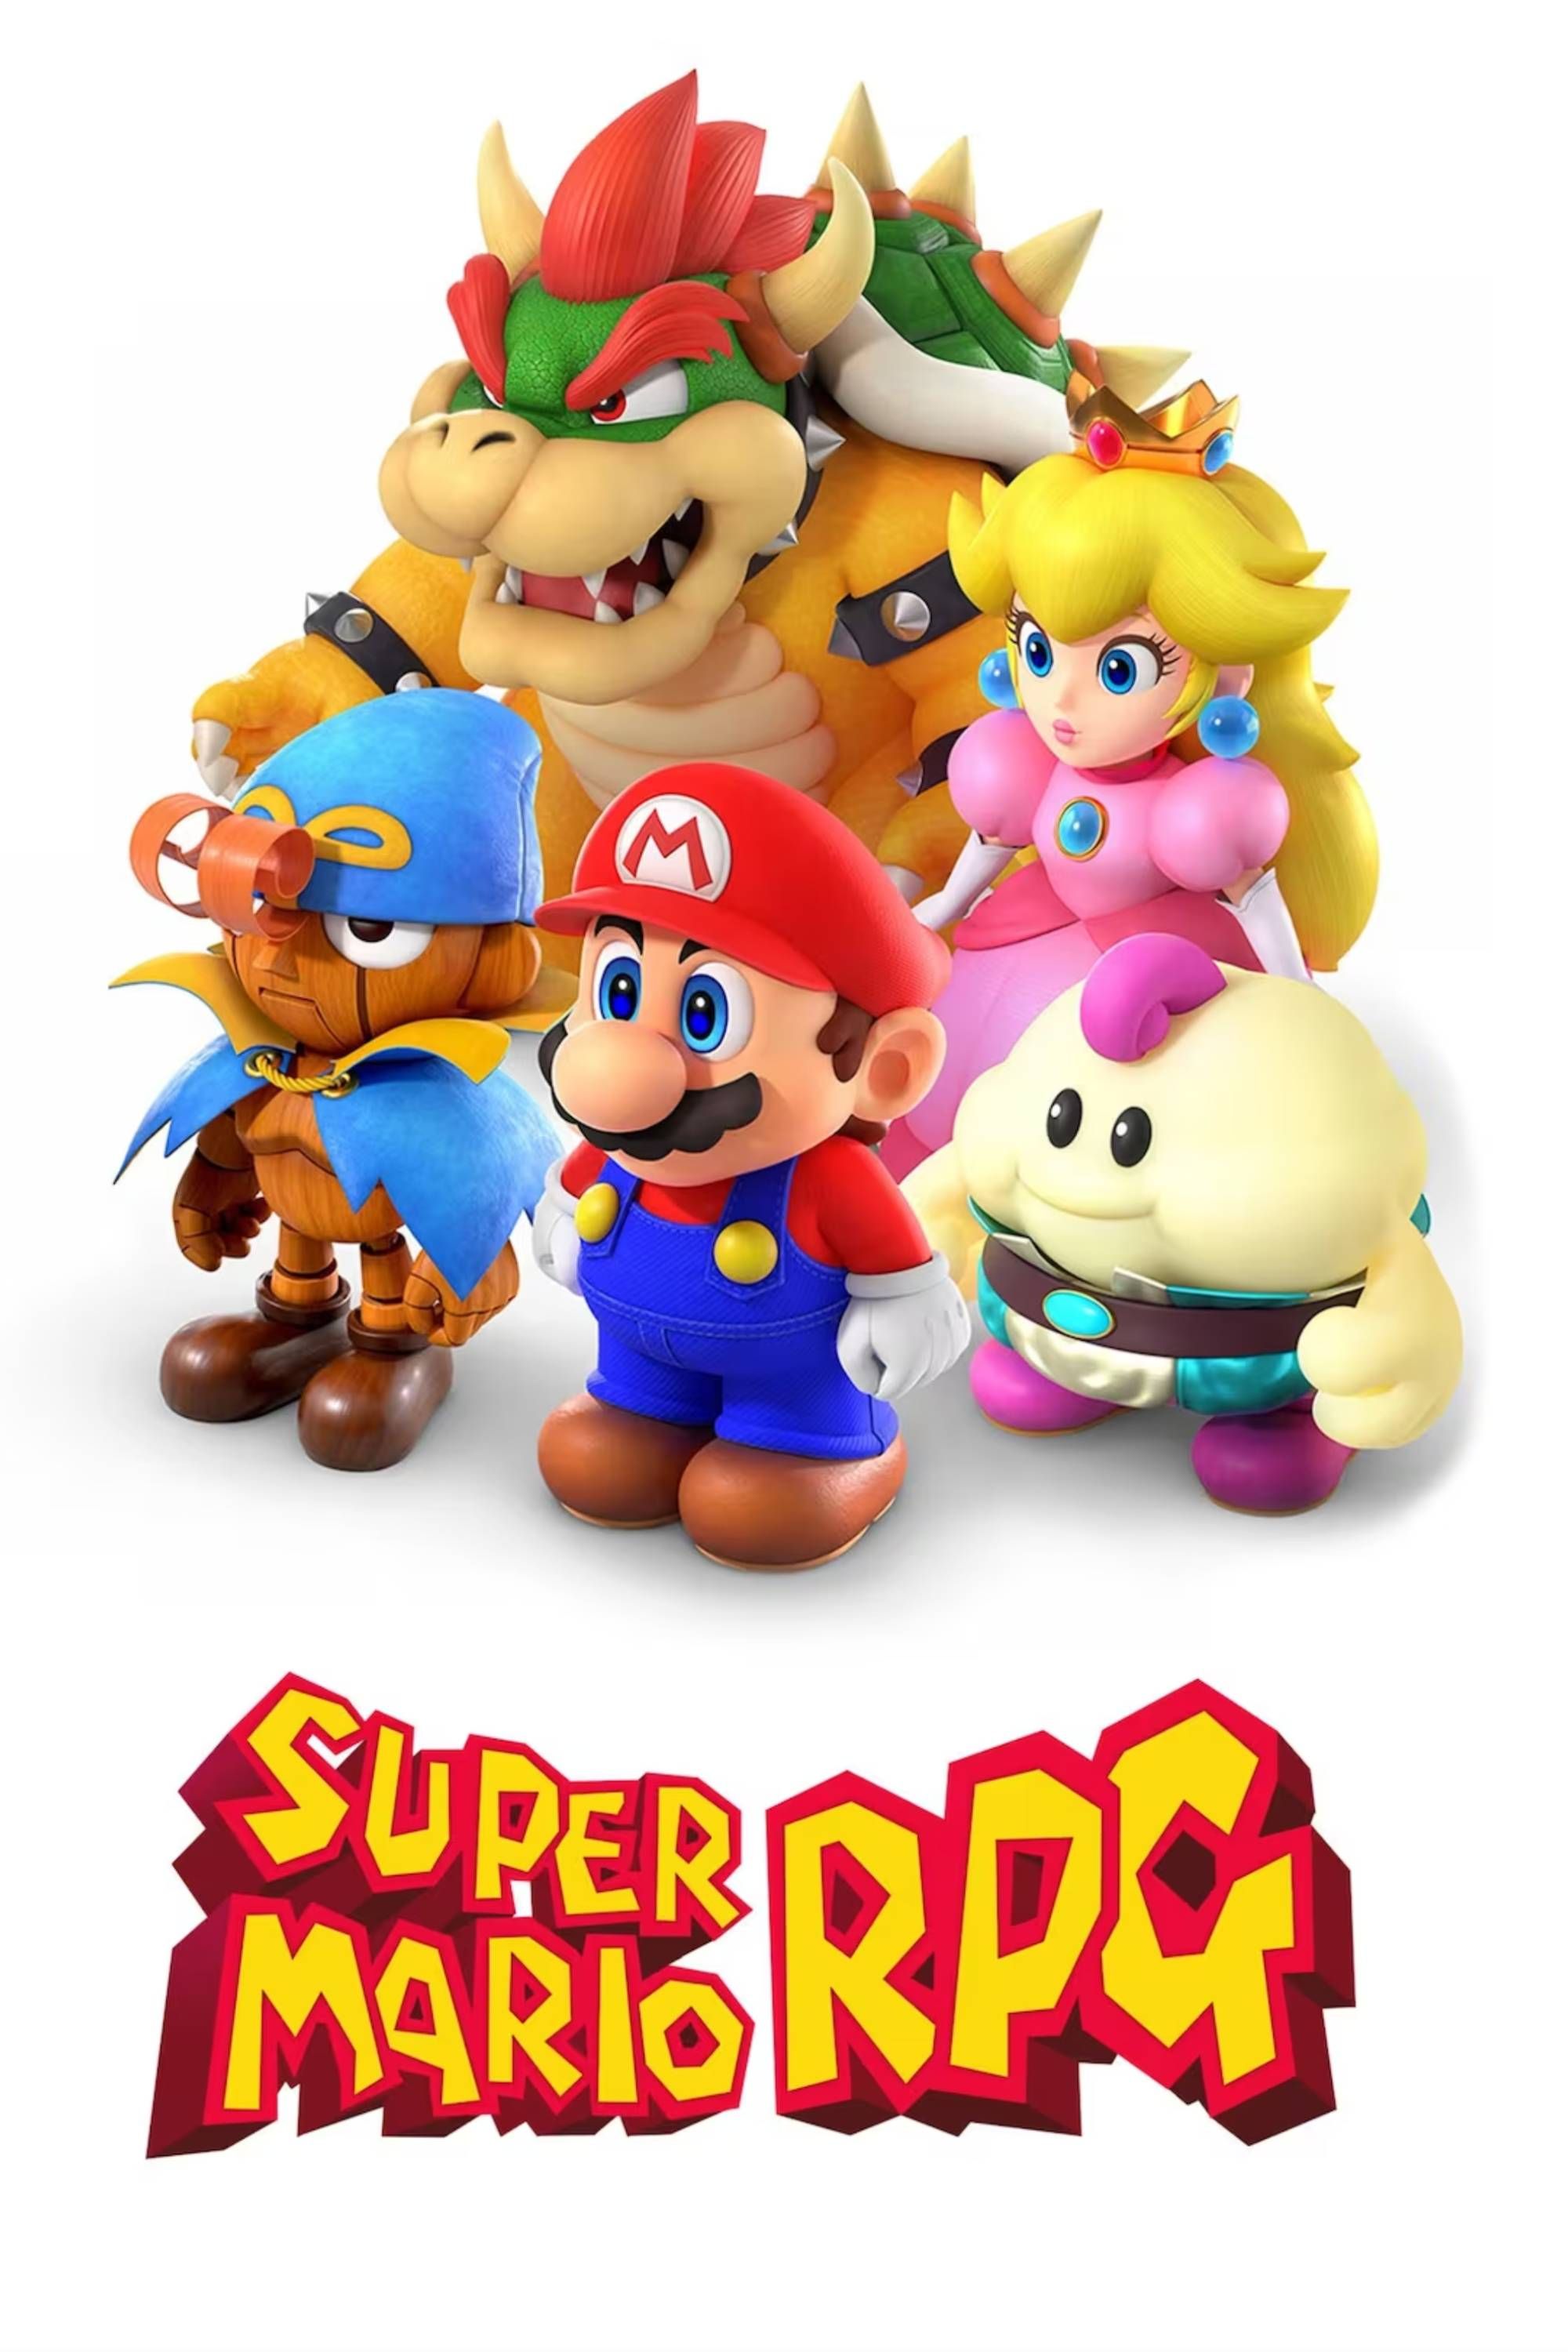 Preorder Super Mario Bros. Wonder And Mario RPG For Just $49 Each